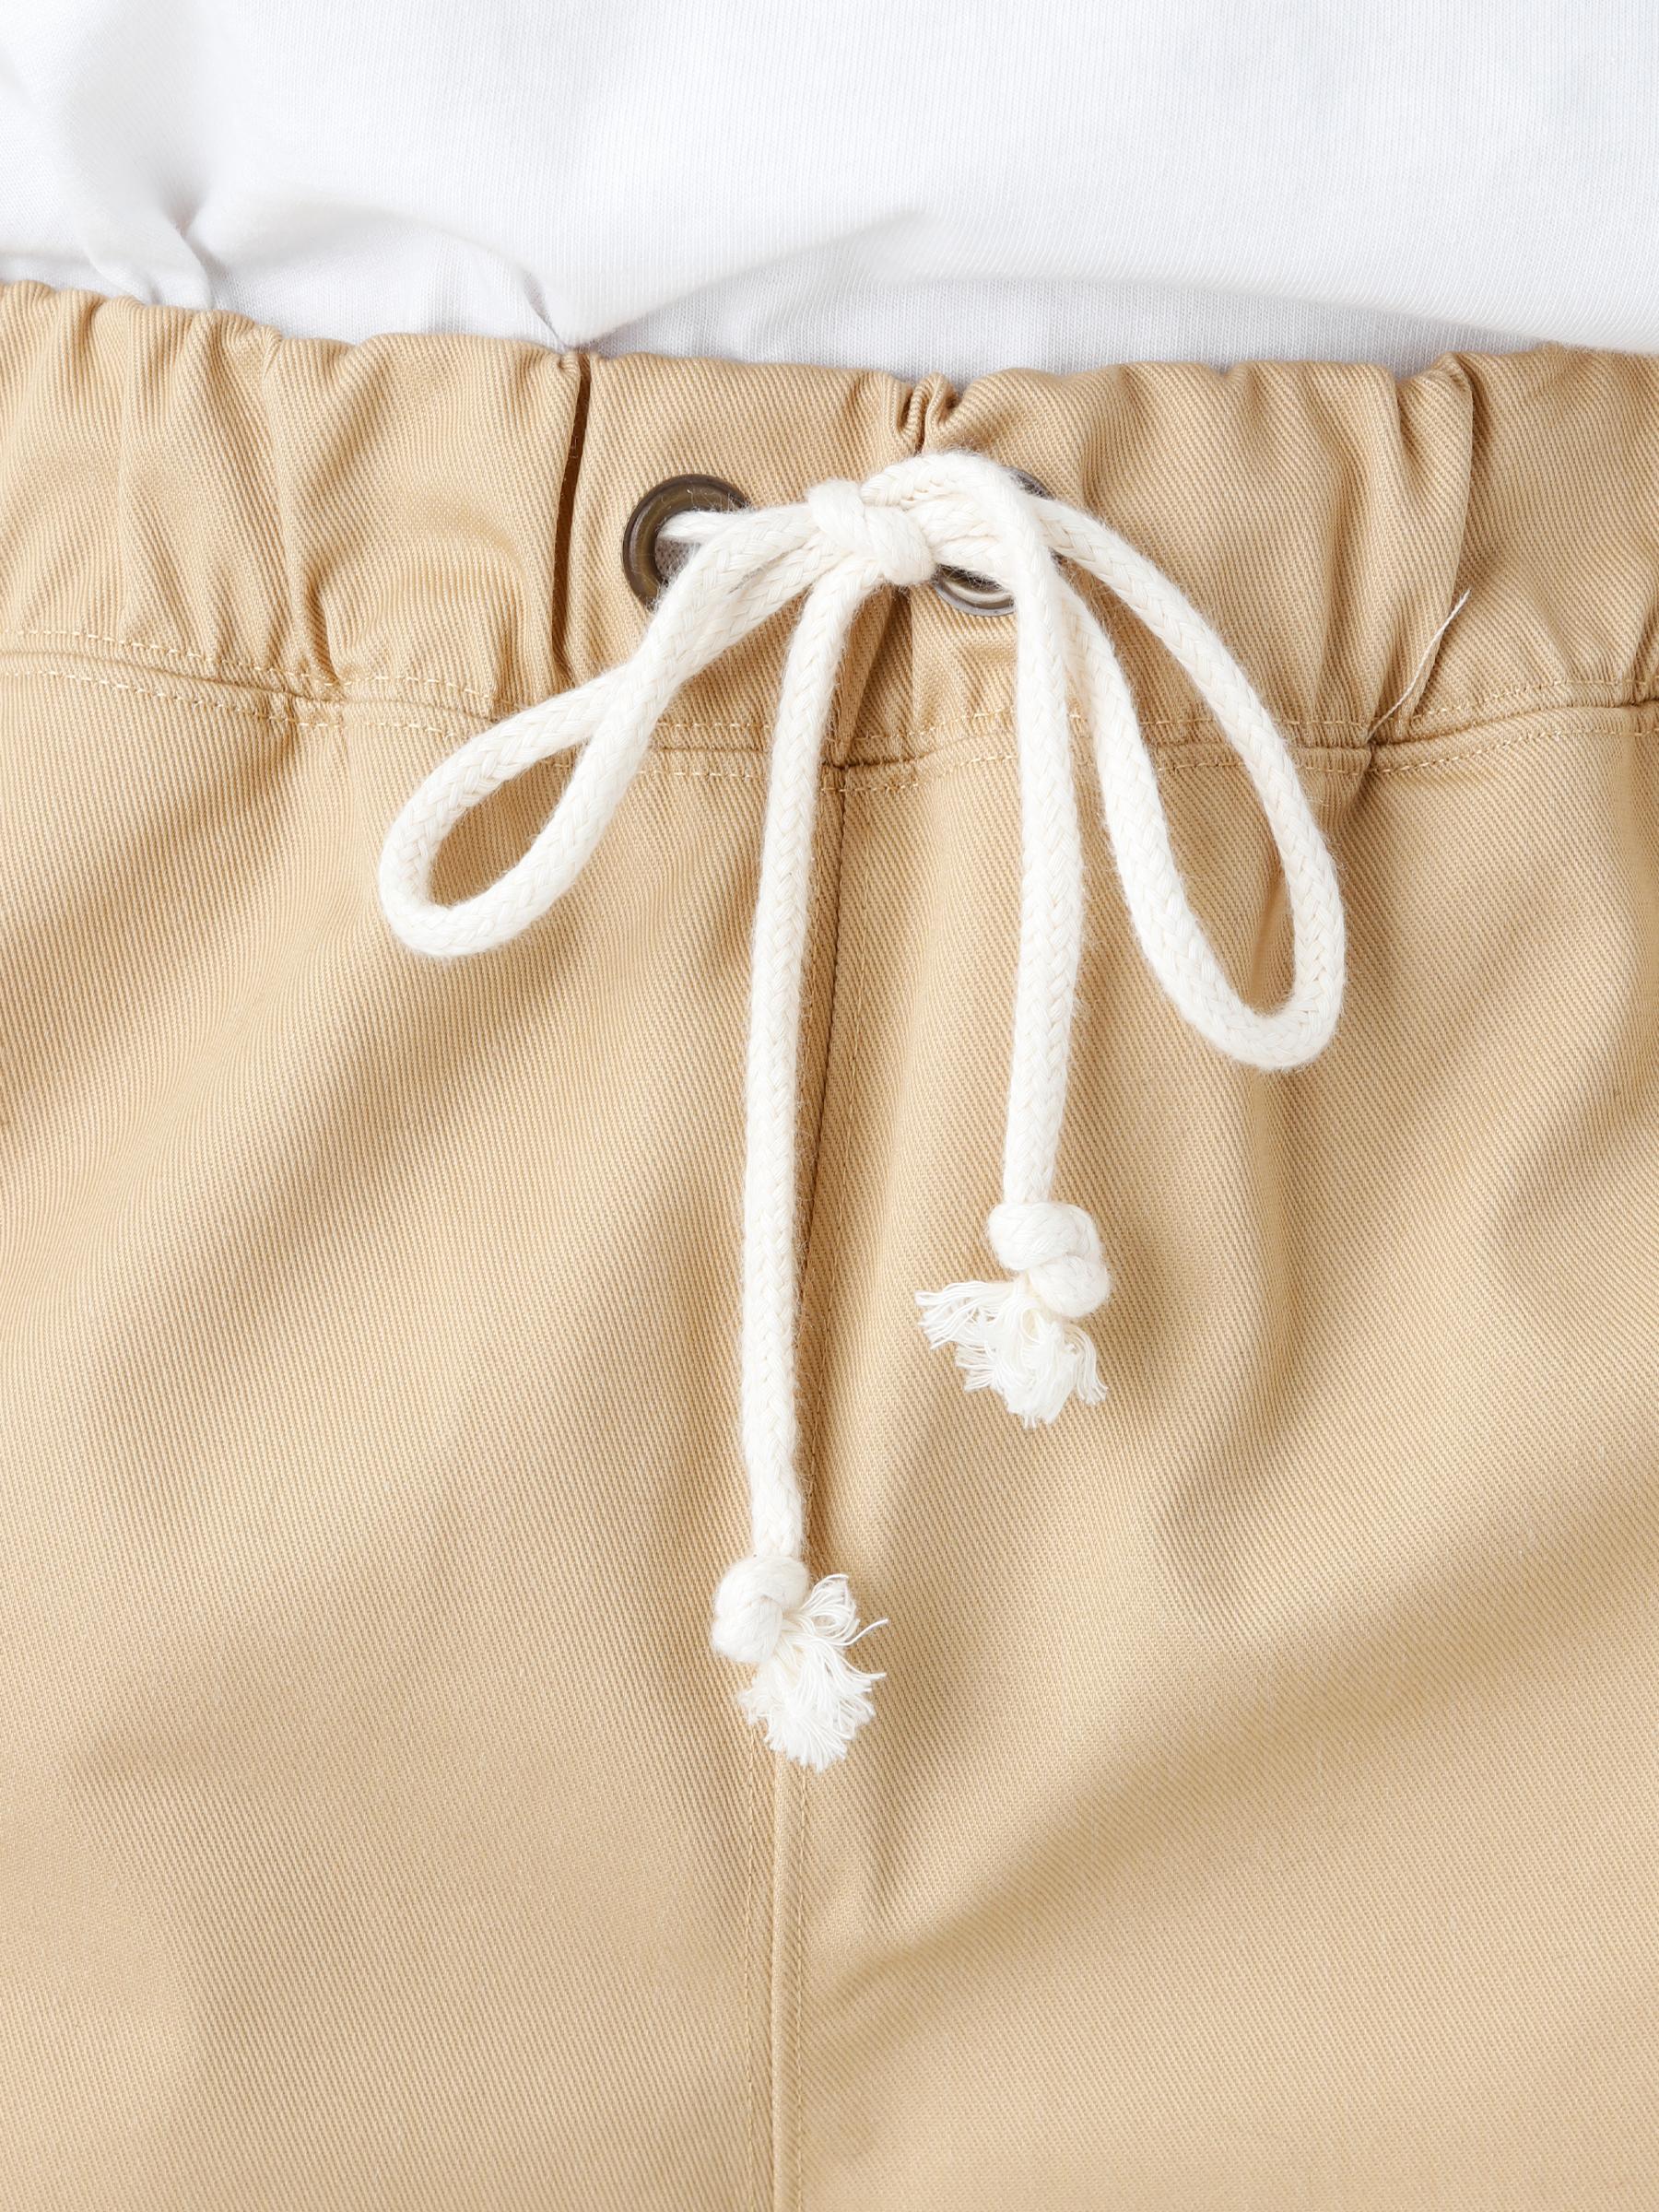 LASTINCH All Size's Cotton Beige Narrow Pant XXS-8XL